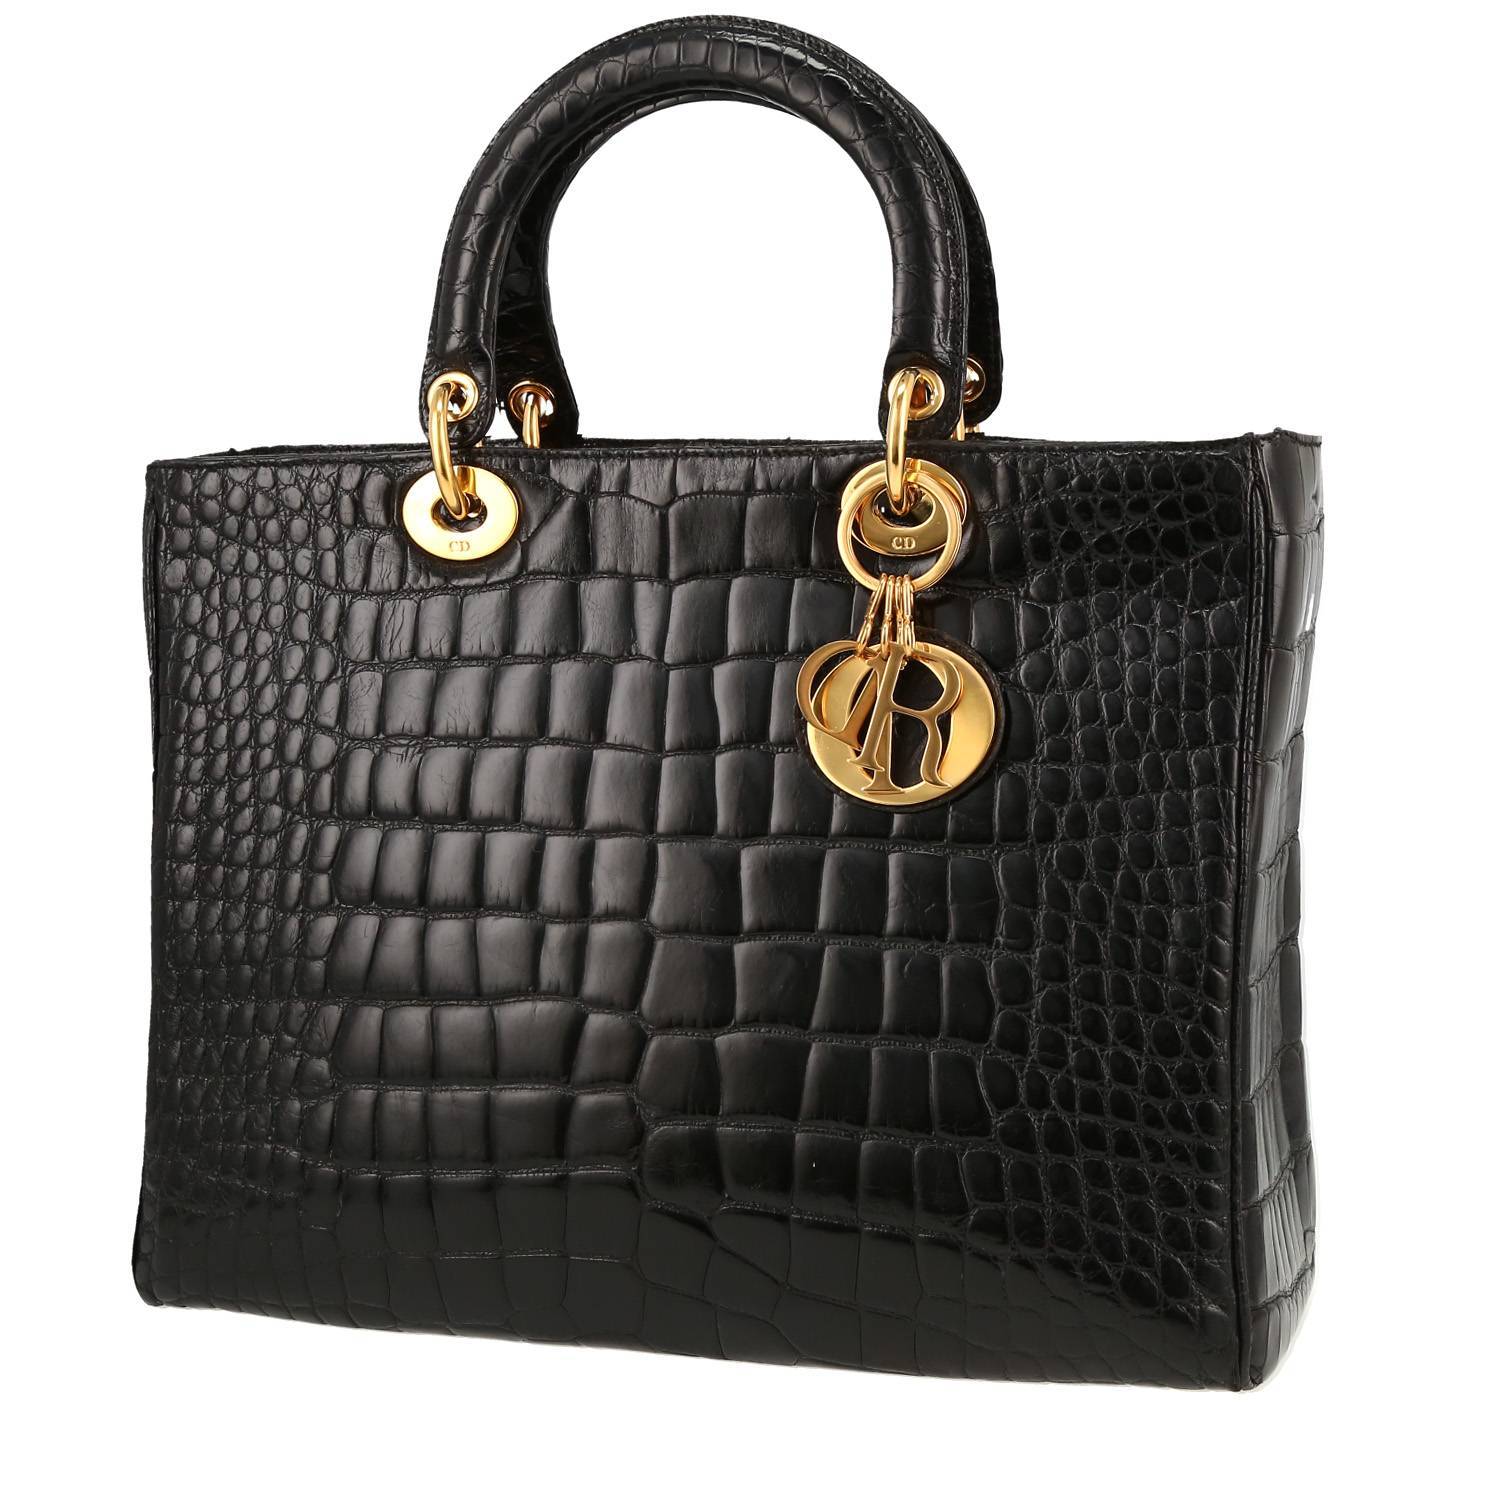 Lady Dior Large Model Handbag In Black Crocodile